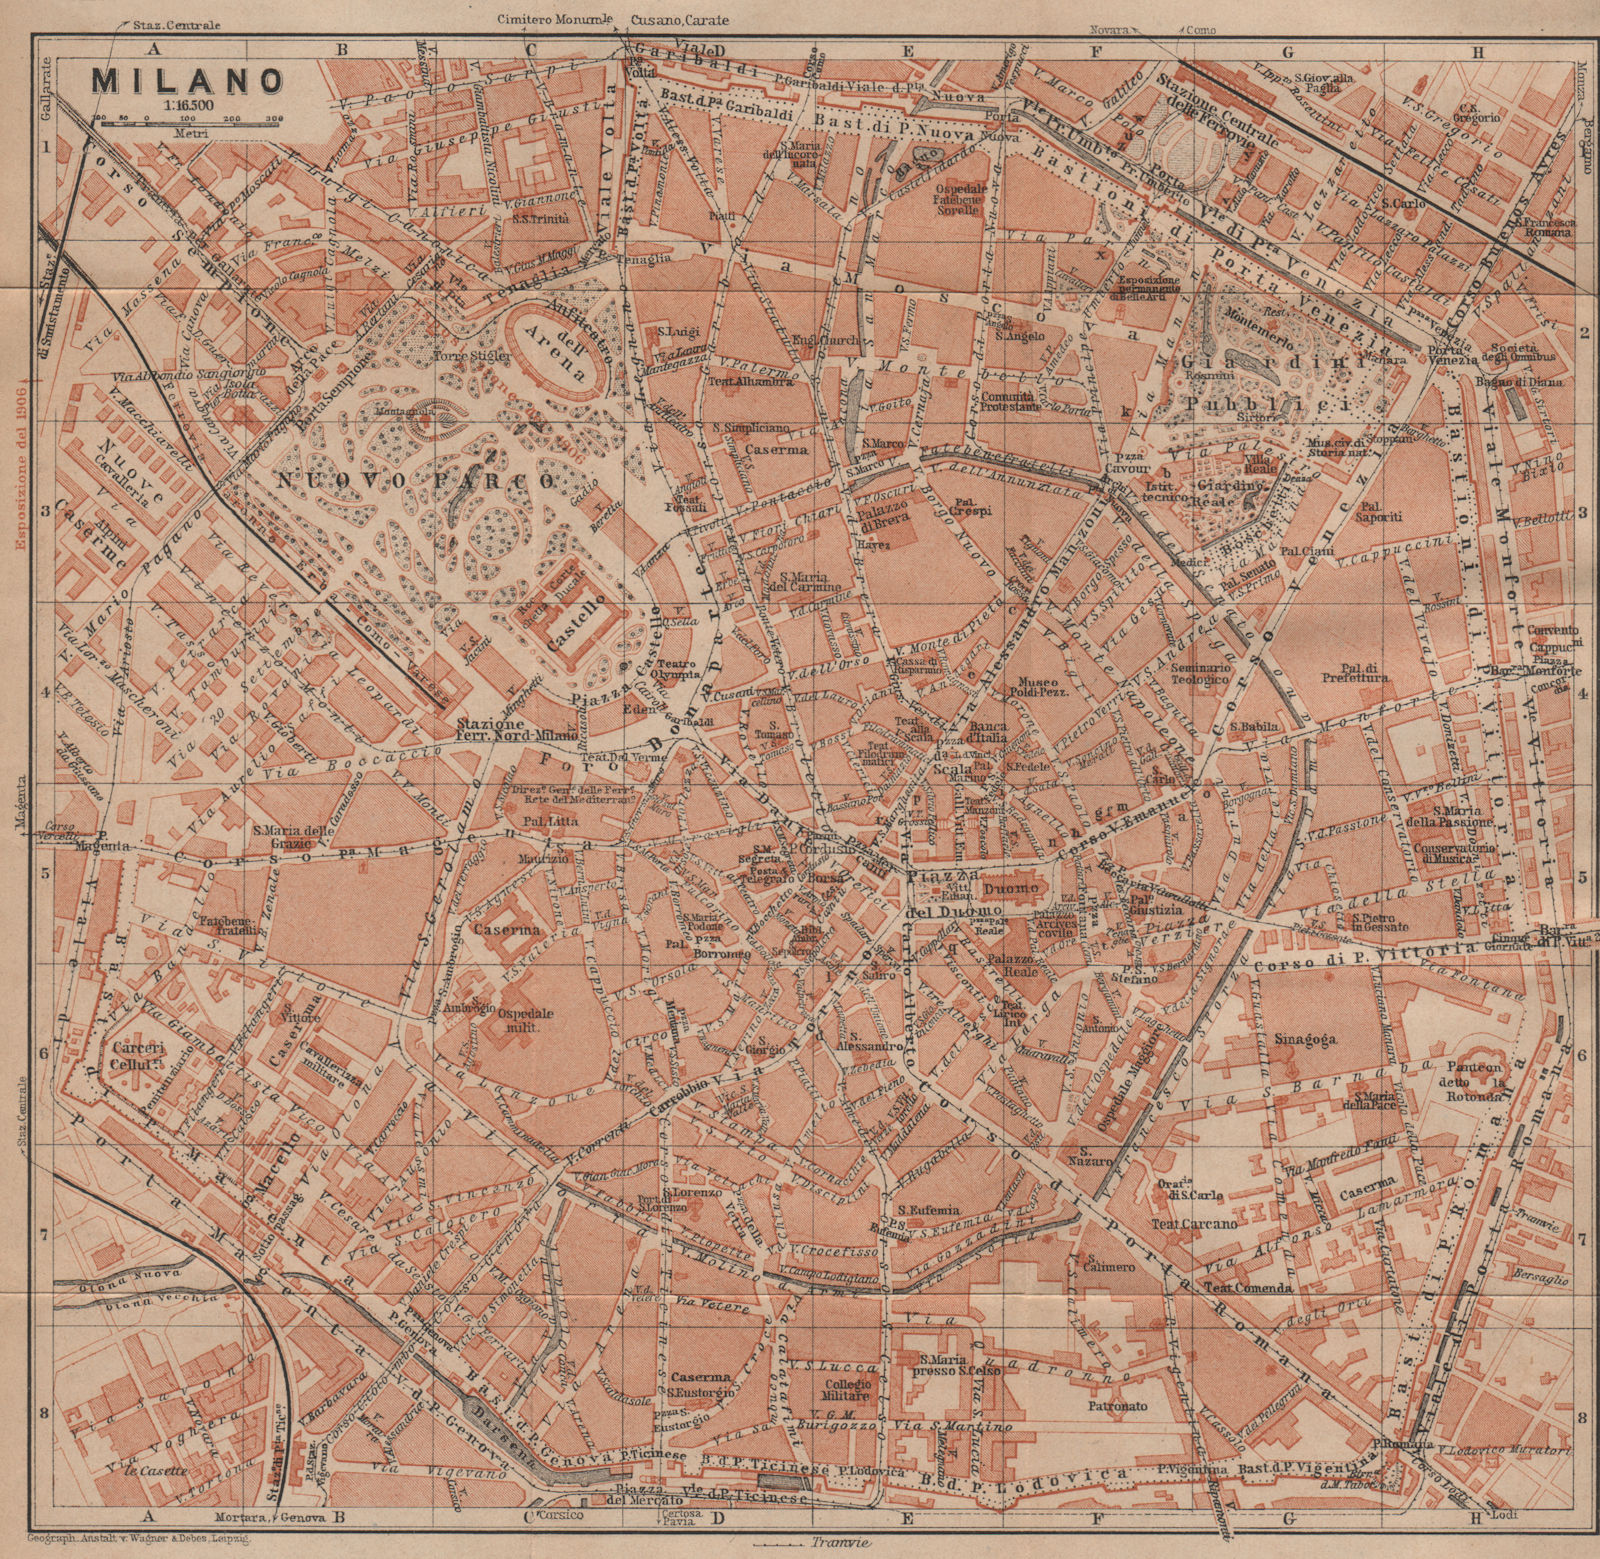 Associate Product MILAN MILANO. town city plan piano urbanistico. Italy mappa. BAEDEKER 1907